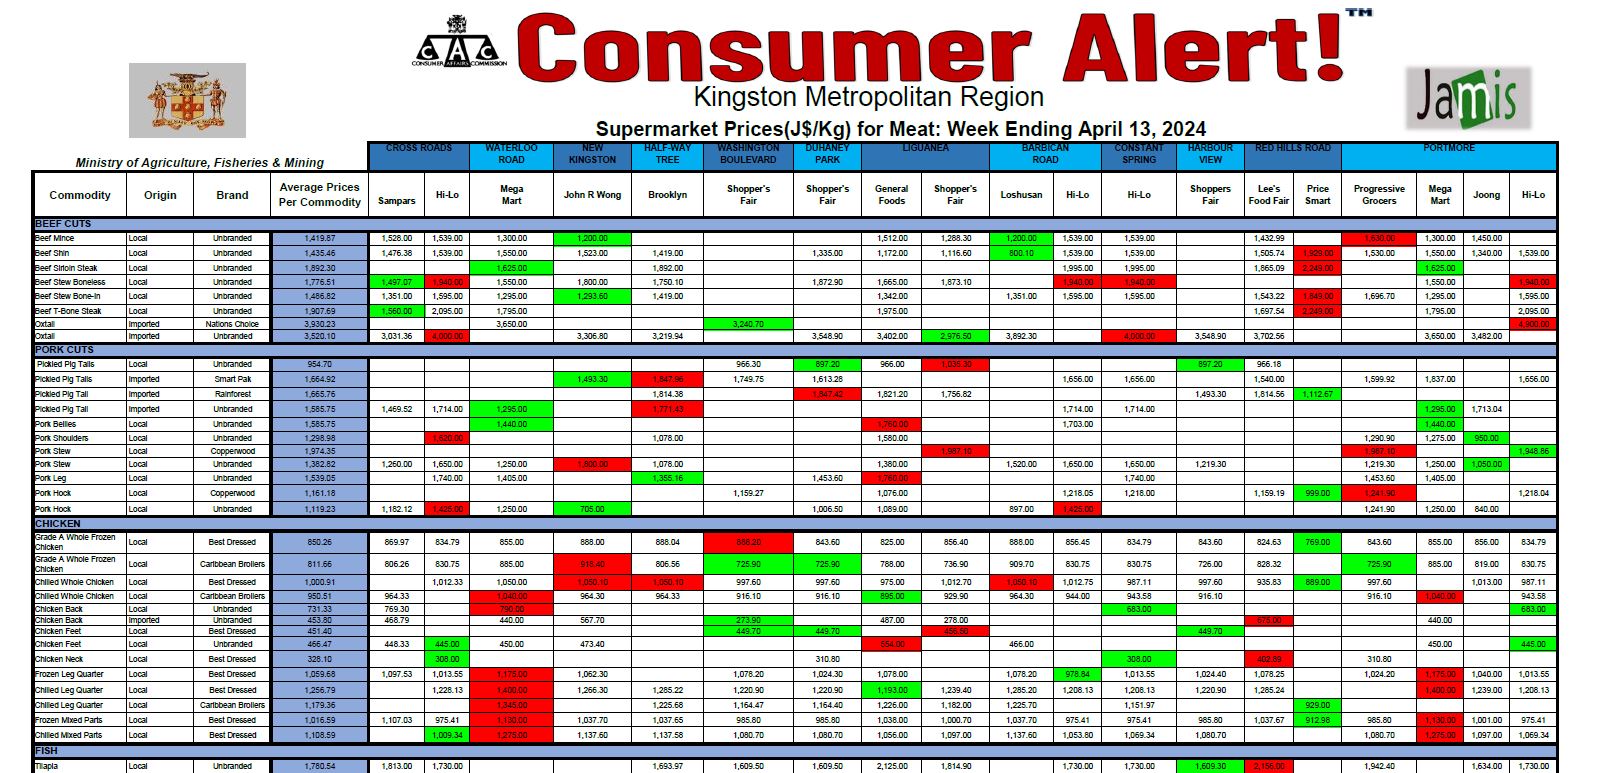  Consumer Alert - Survey of Meat April 13, 2024